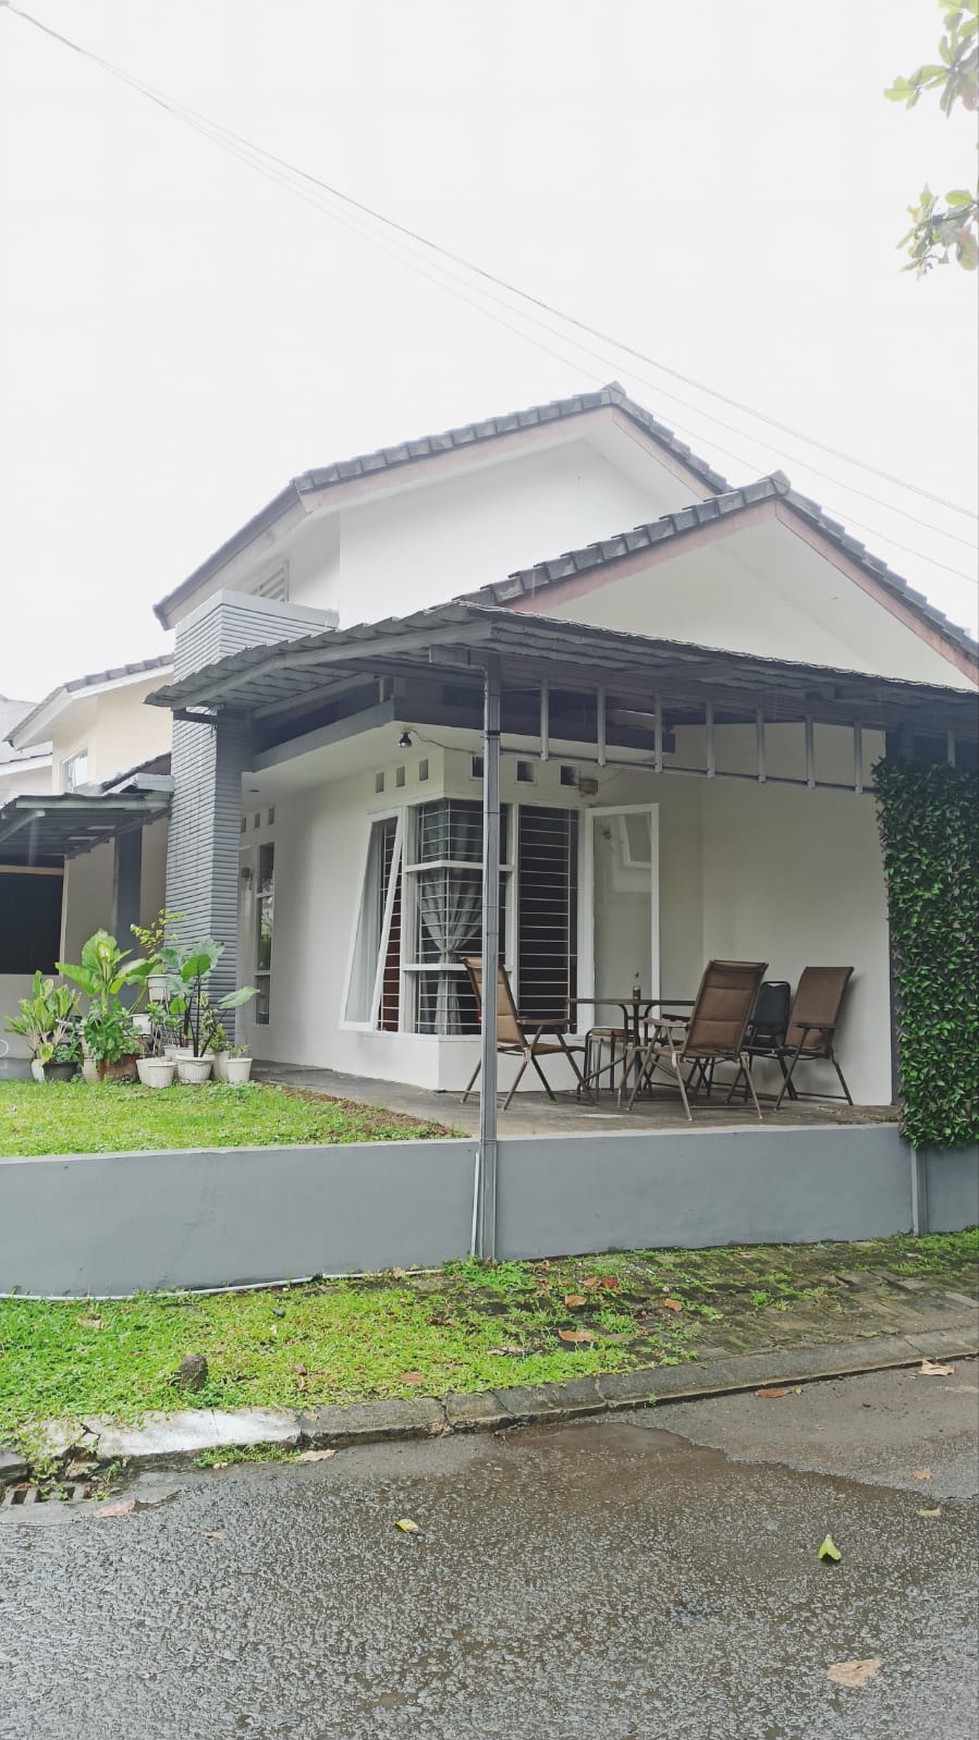 Rumah sejuk, Hoek, hadap Selatan bagus, lokasi strategis di Permata Bintaro Jaya Sektor 9